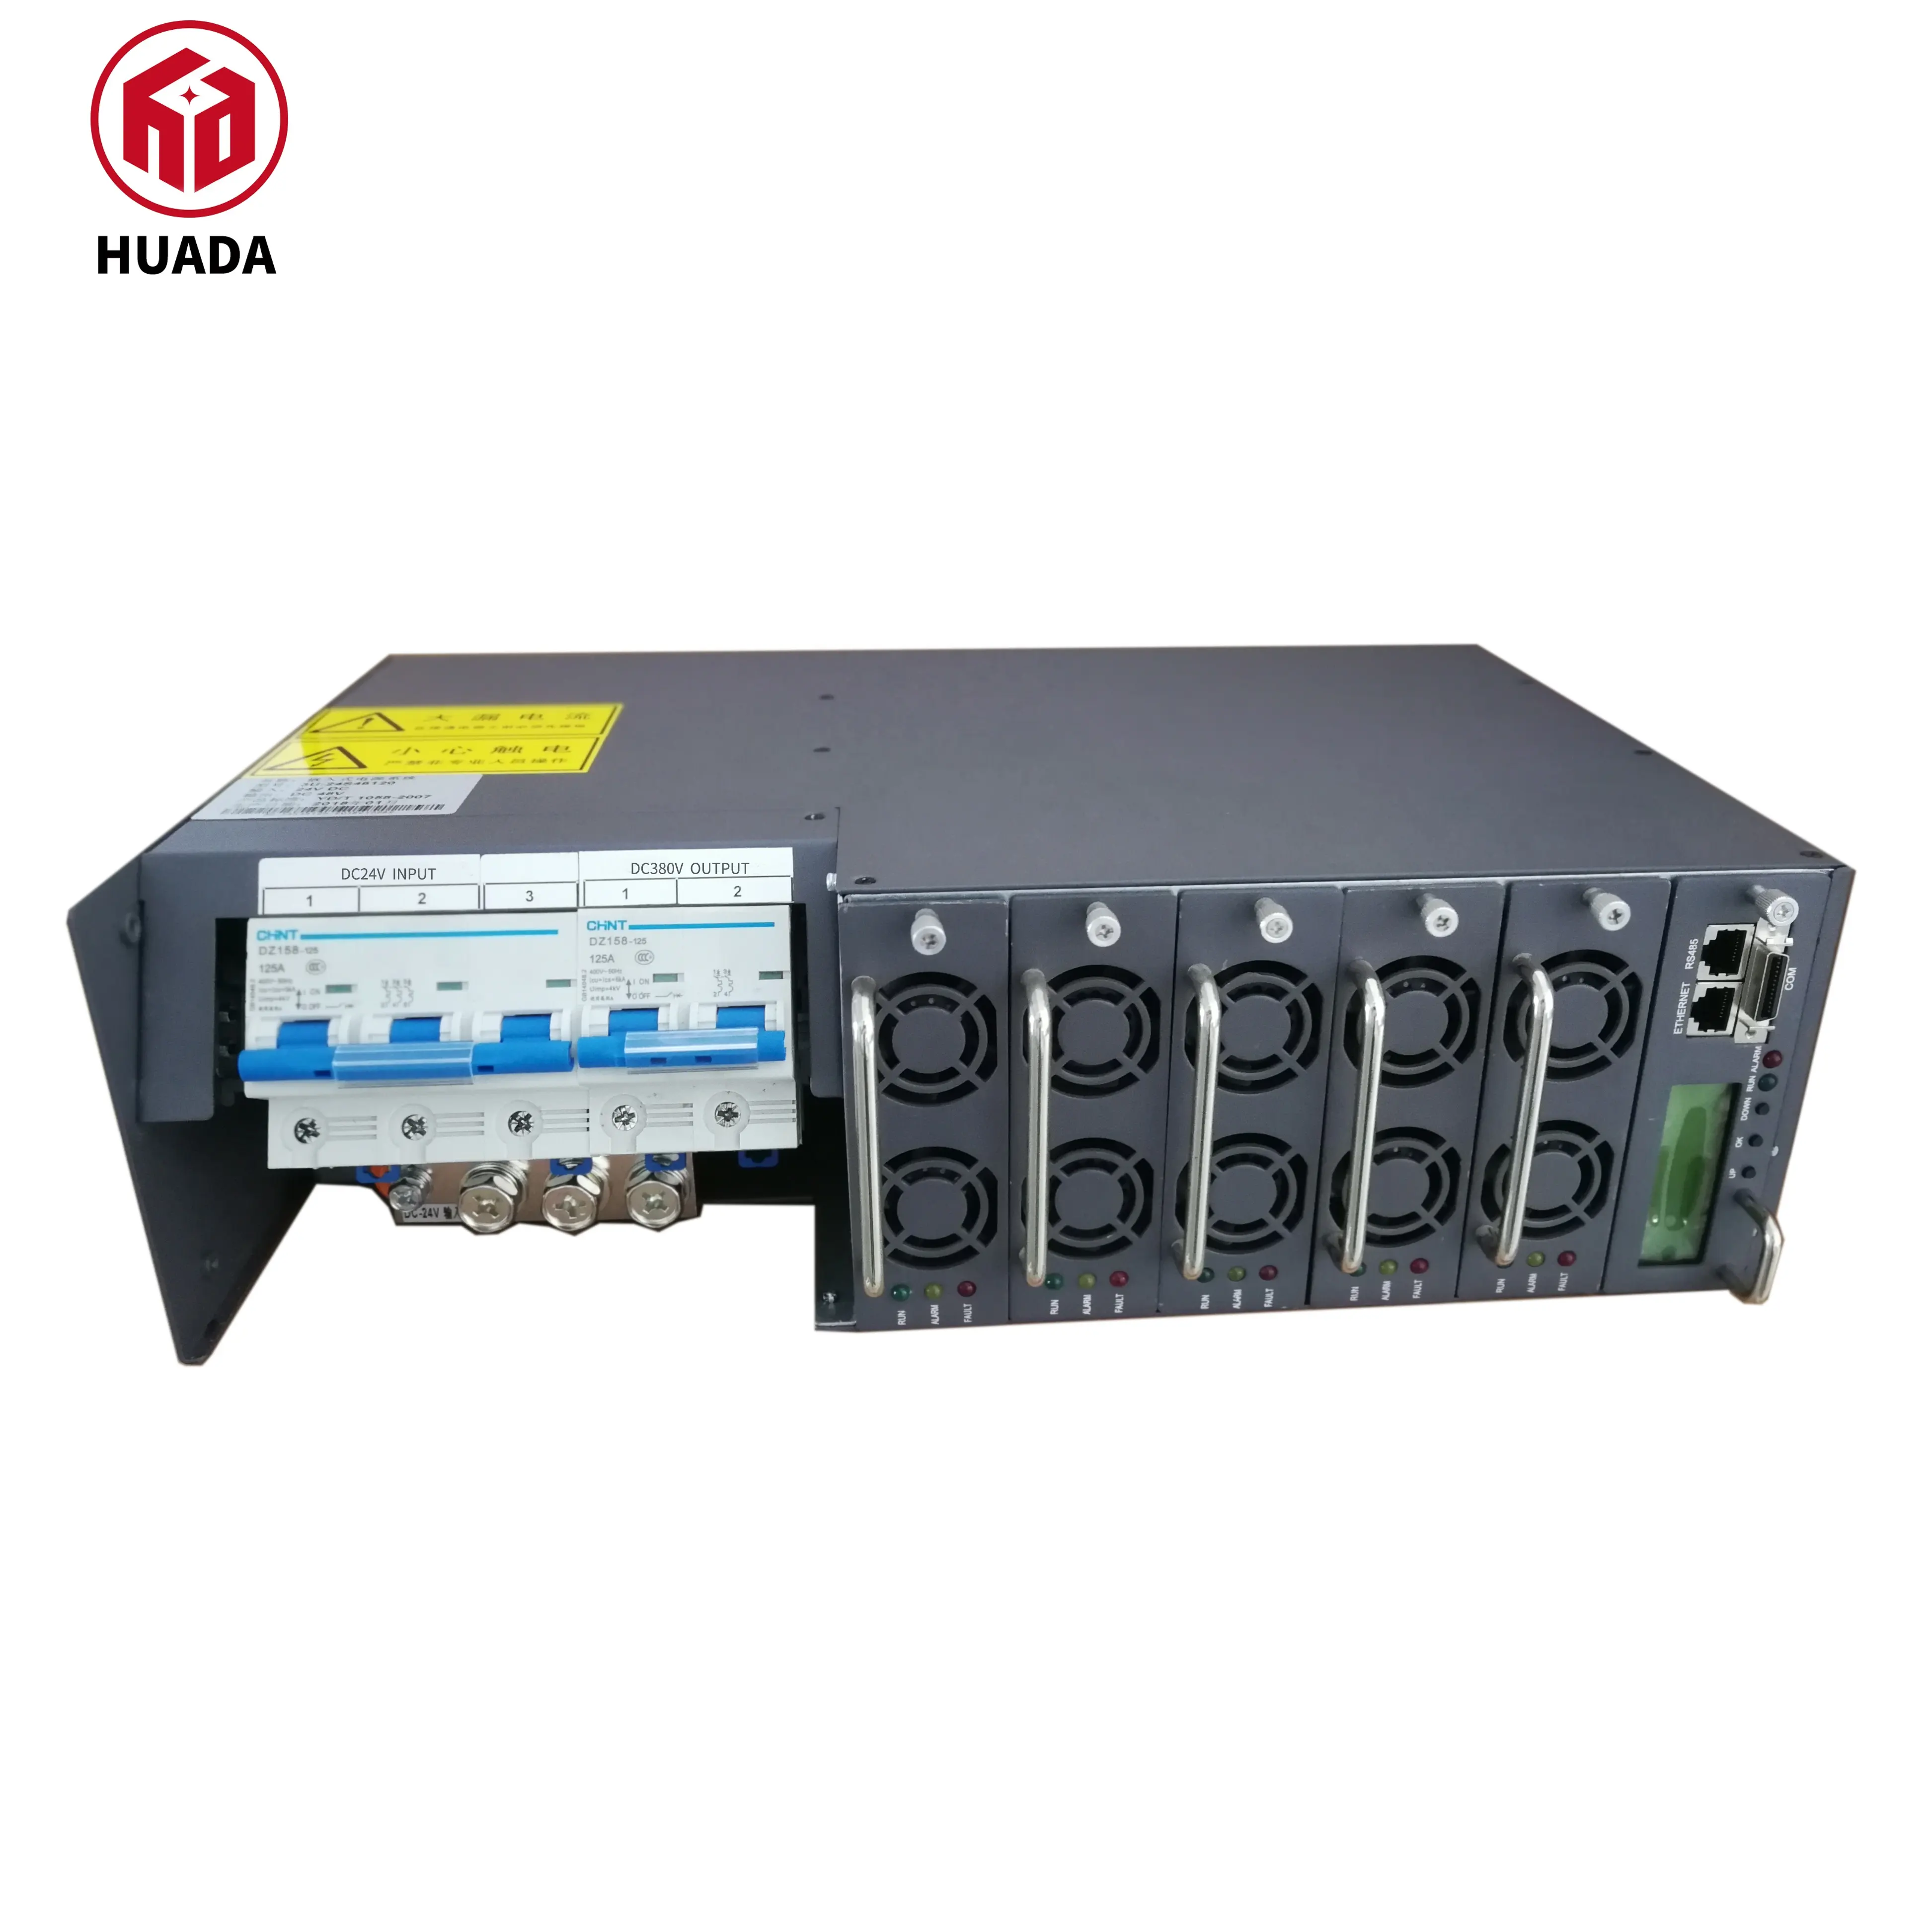 OEM-Convertidor de potencia de 10a, CC, CC, cargador de batería, rectificador, módulo integrado de 48V para telecomunicaciones